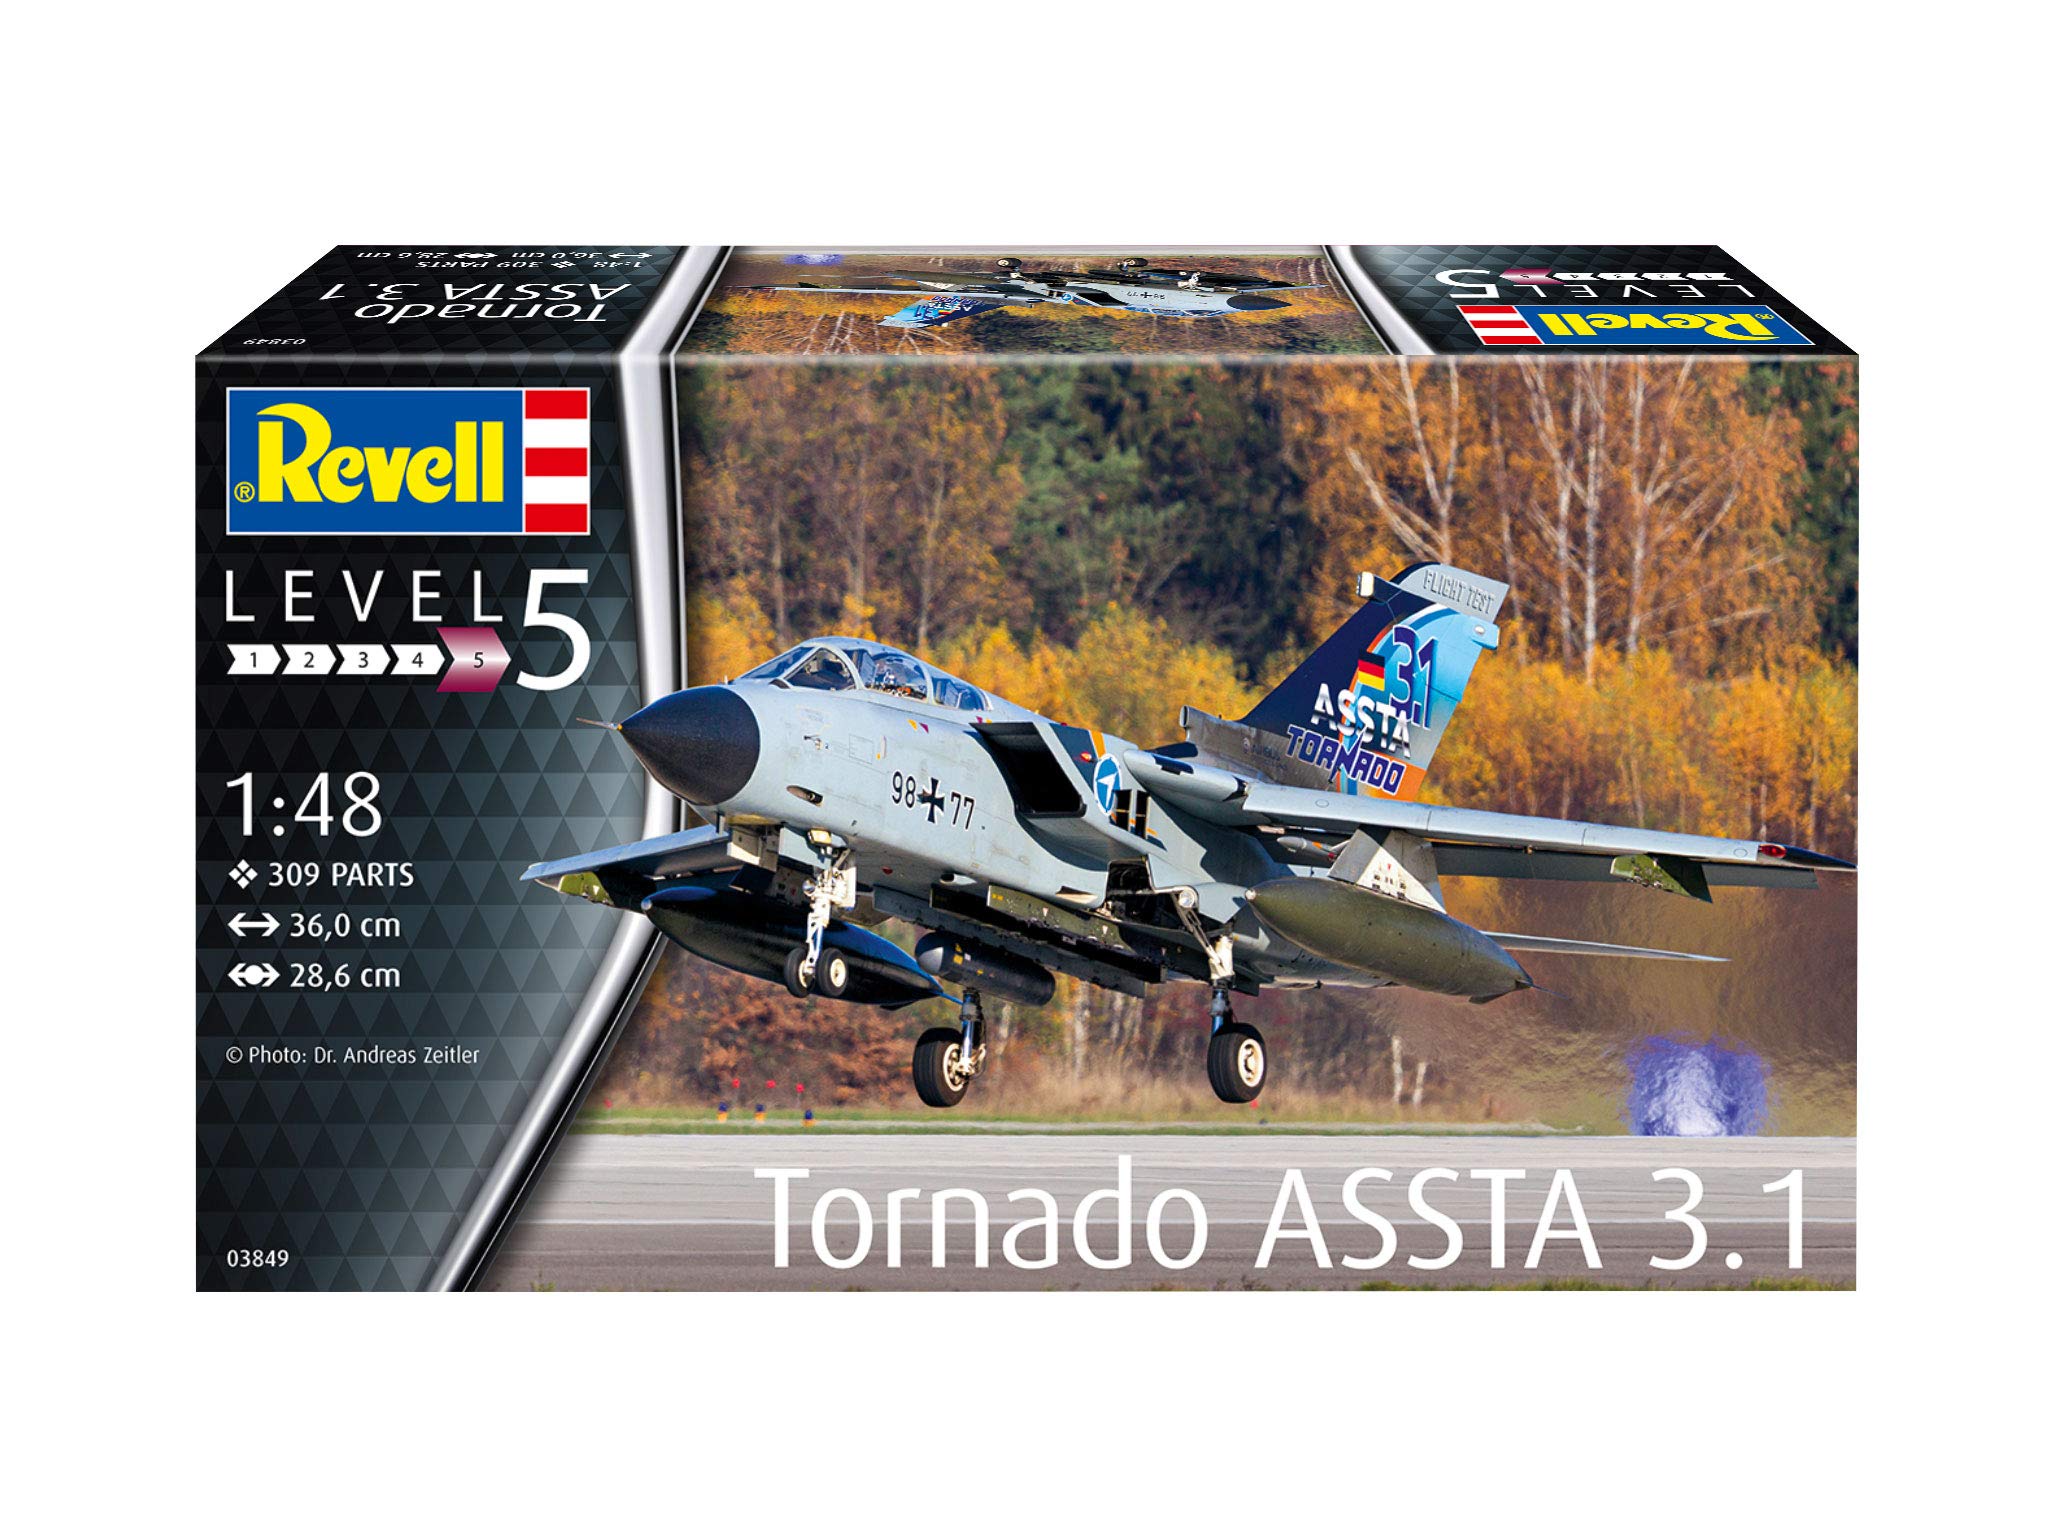 Revell RV03849 03849 Tornado ASSTA 3.1 Plastic Model kit 1:48 Scale, Unpainted